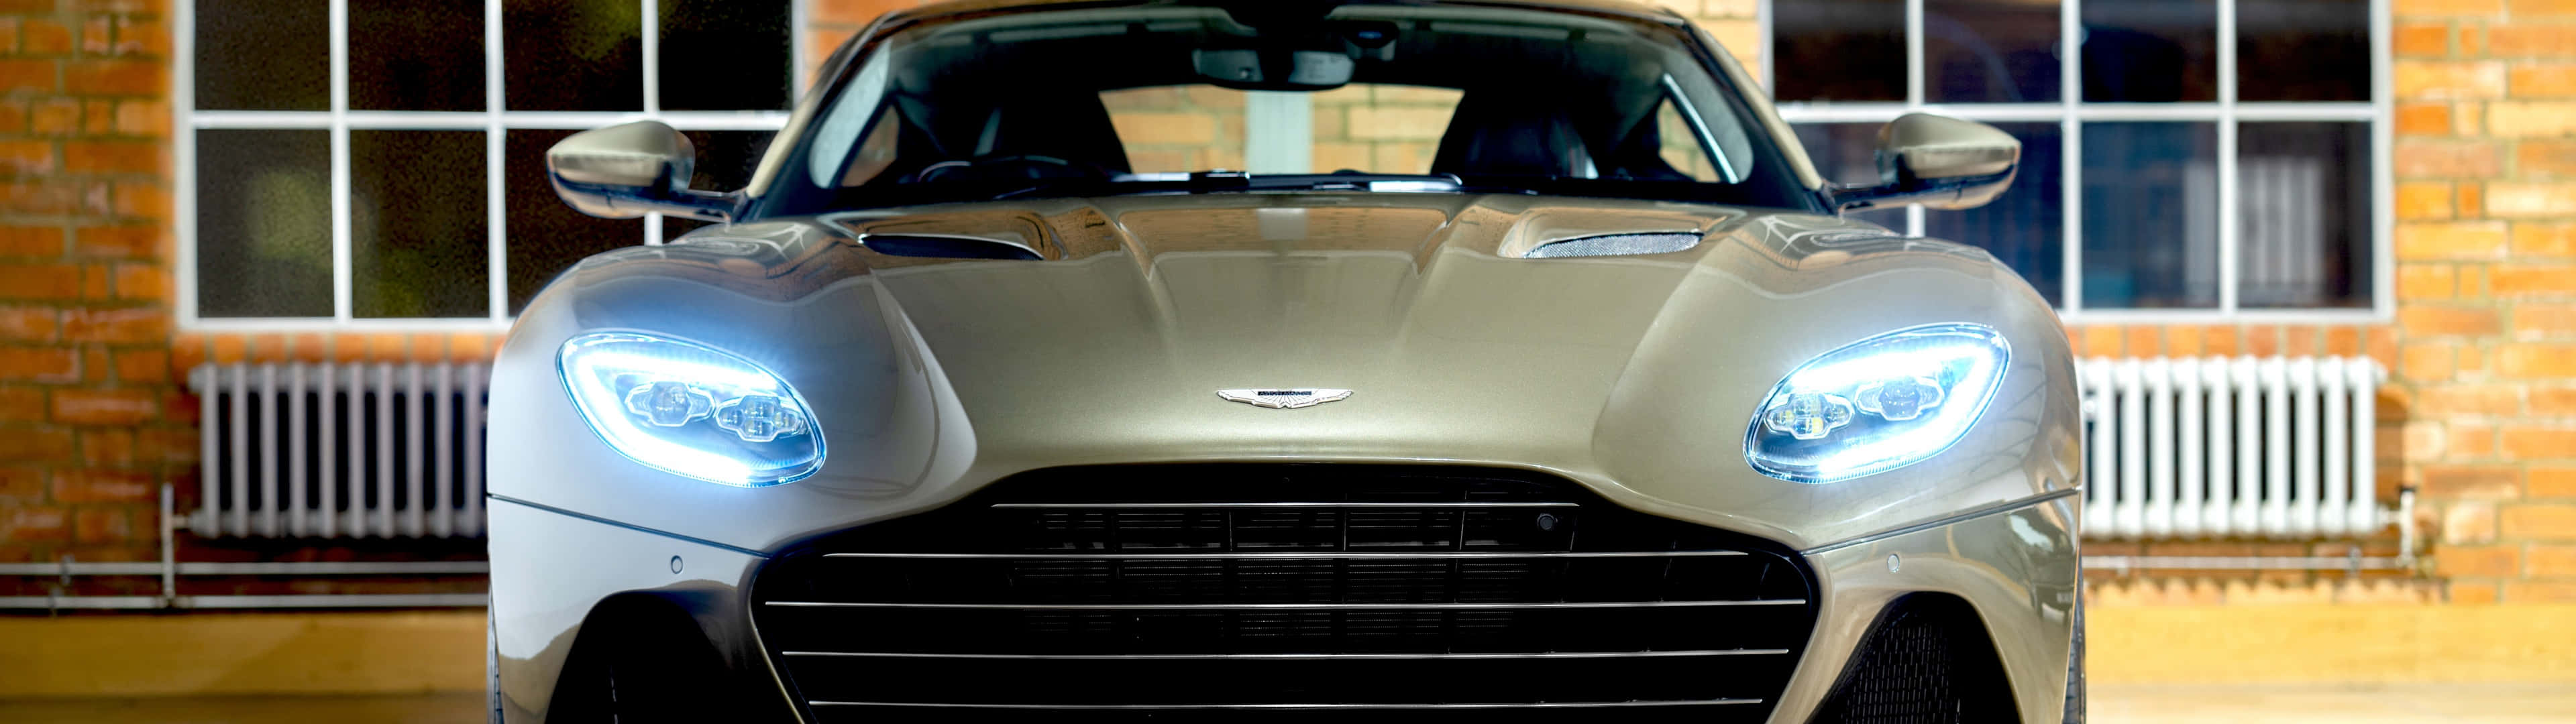 Aston Martin DBS Superleggera on the road, in profile view Wallpaper